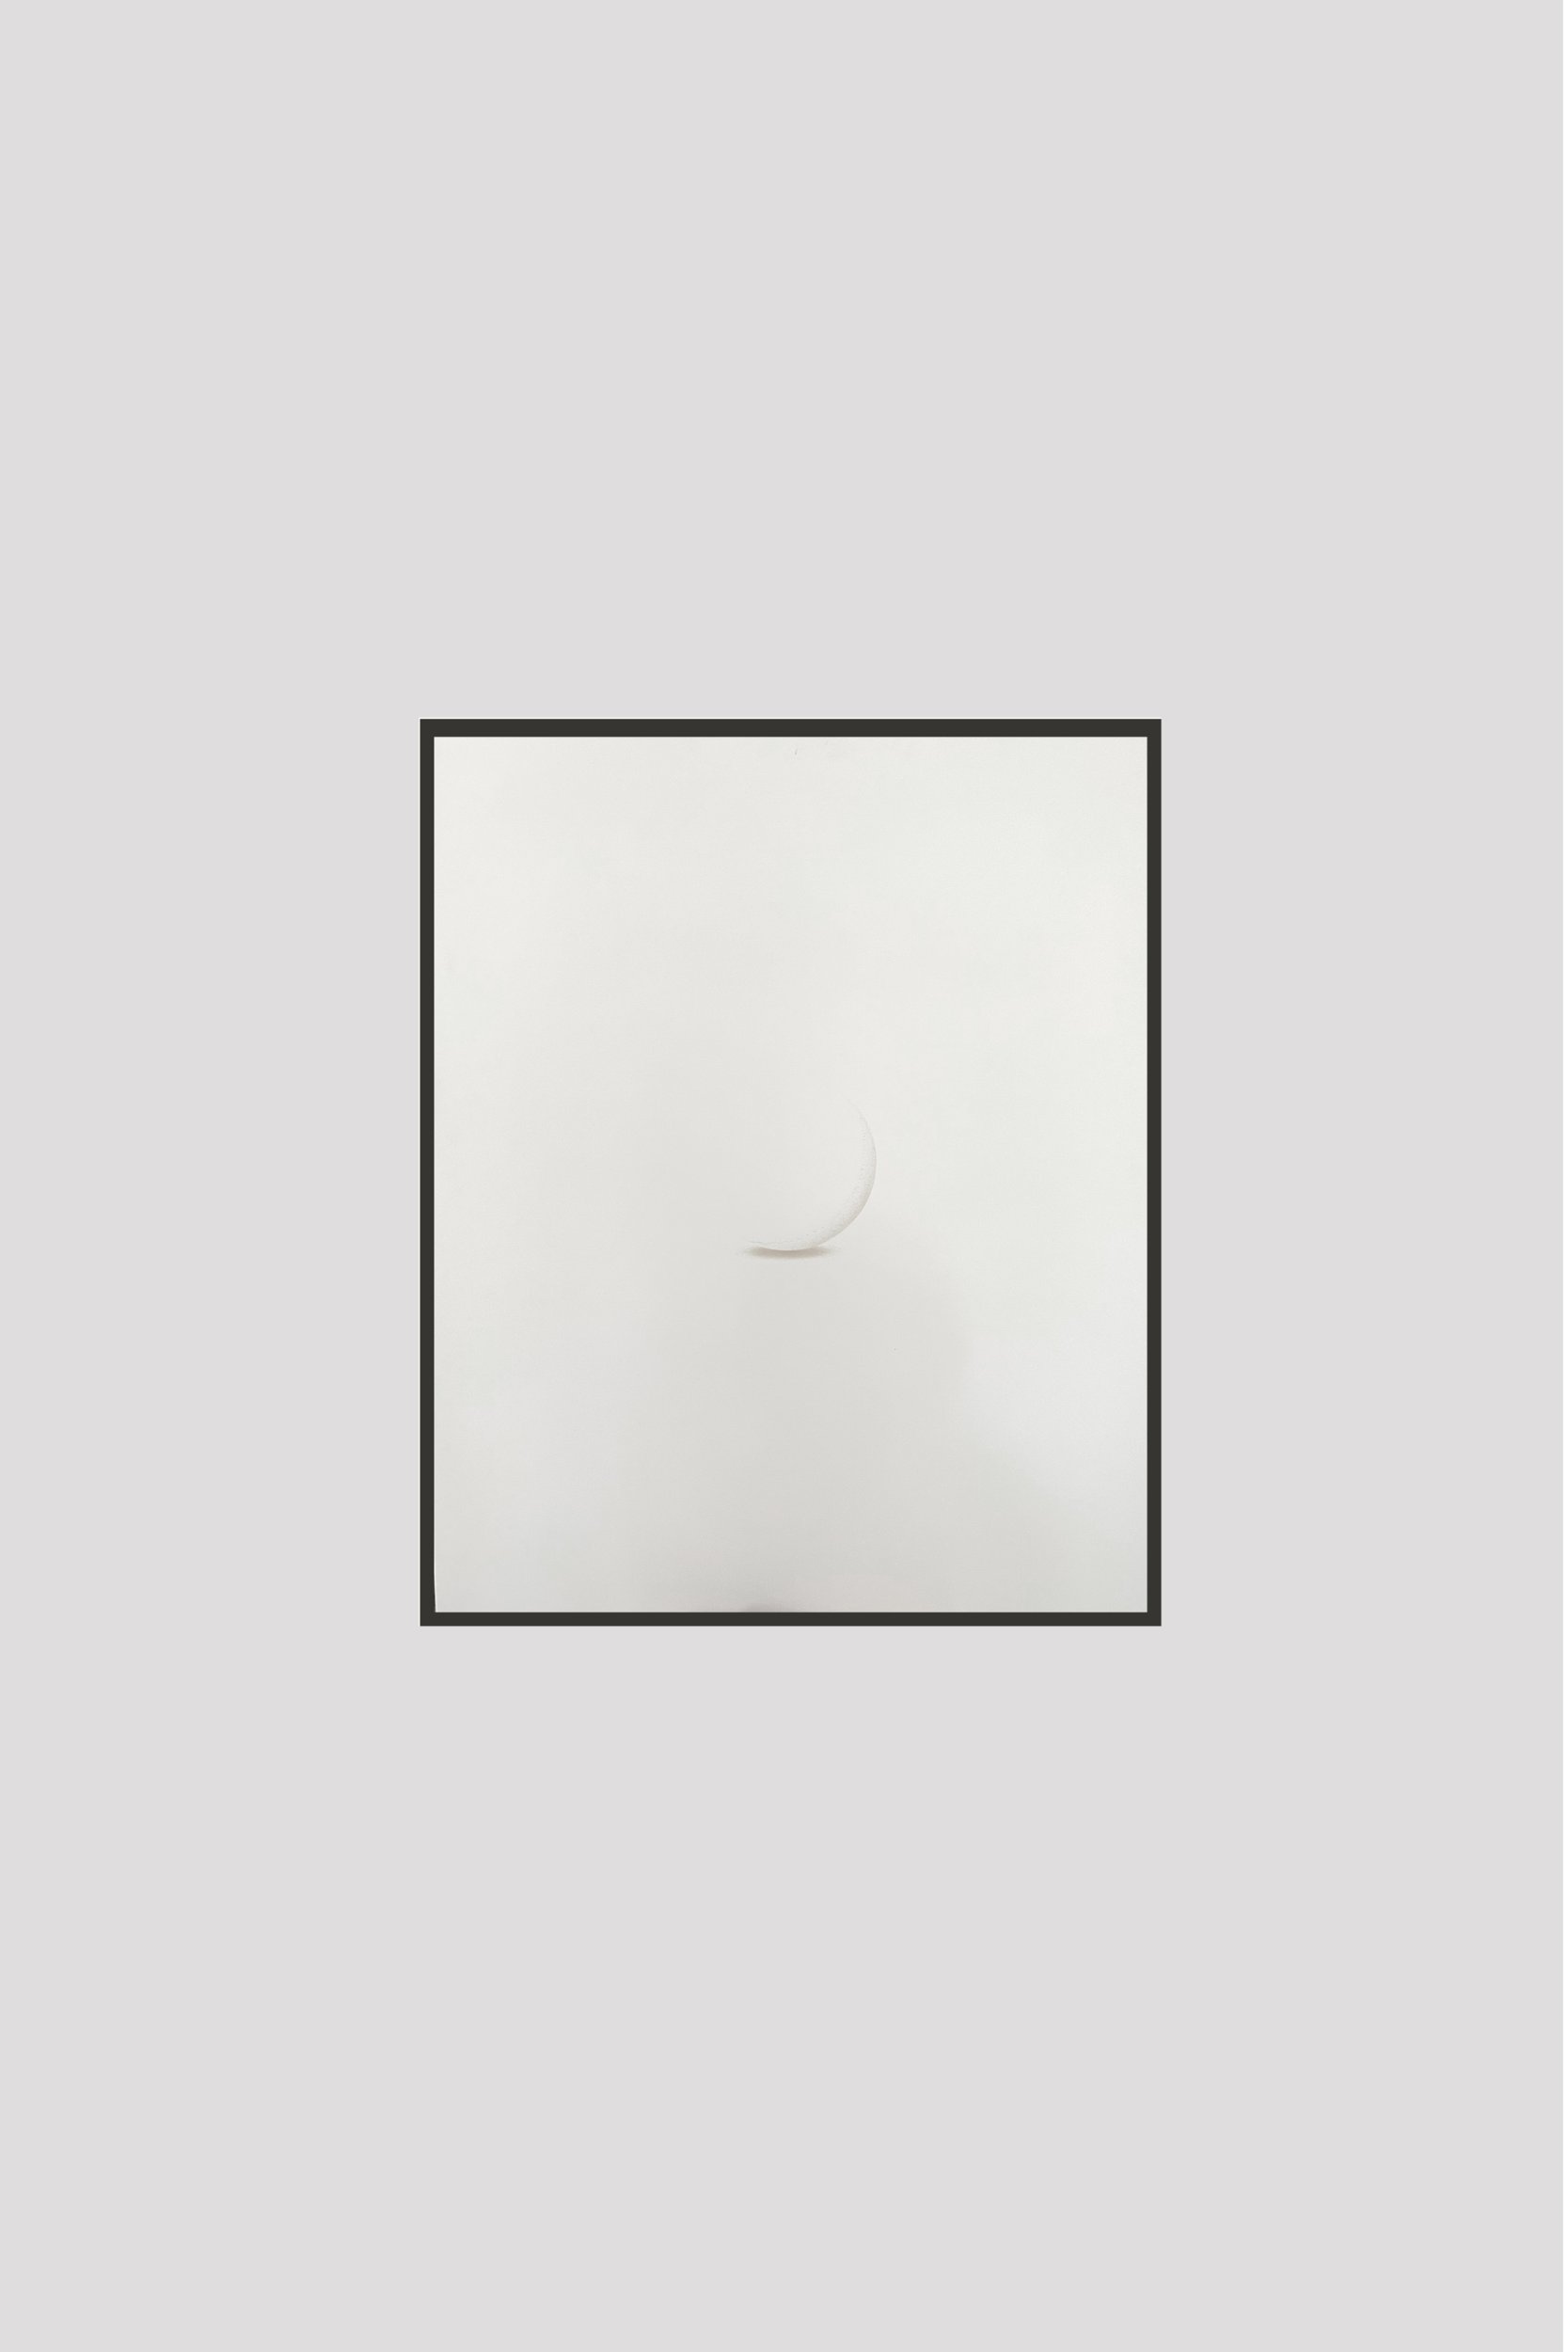 


Daniel Gustav Cramer, LXXXIX, 2022. Laser burnt drawing, burnished metal frame. 102 x 83 x 4 cm. Unique



